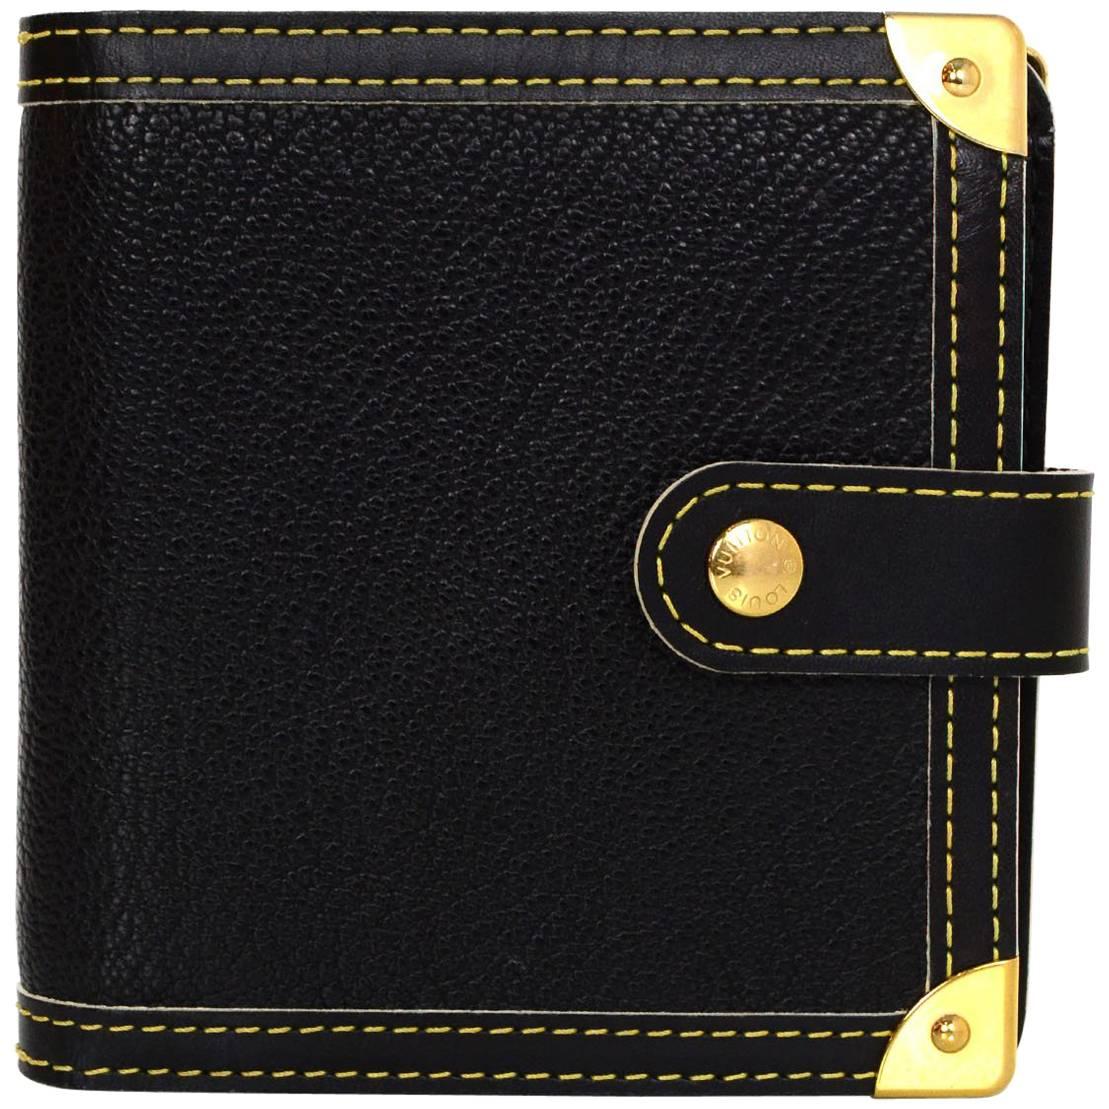 Louis Vuitton Black Leather Compact Suhali Wallet rt. $690